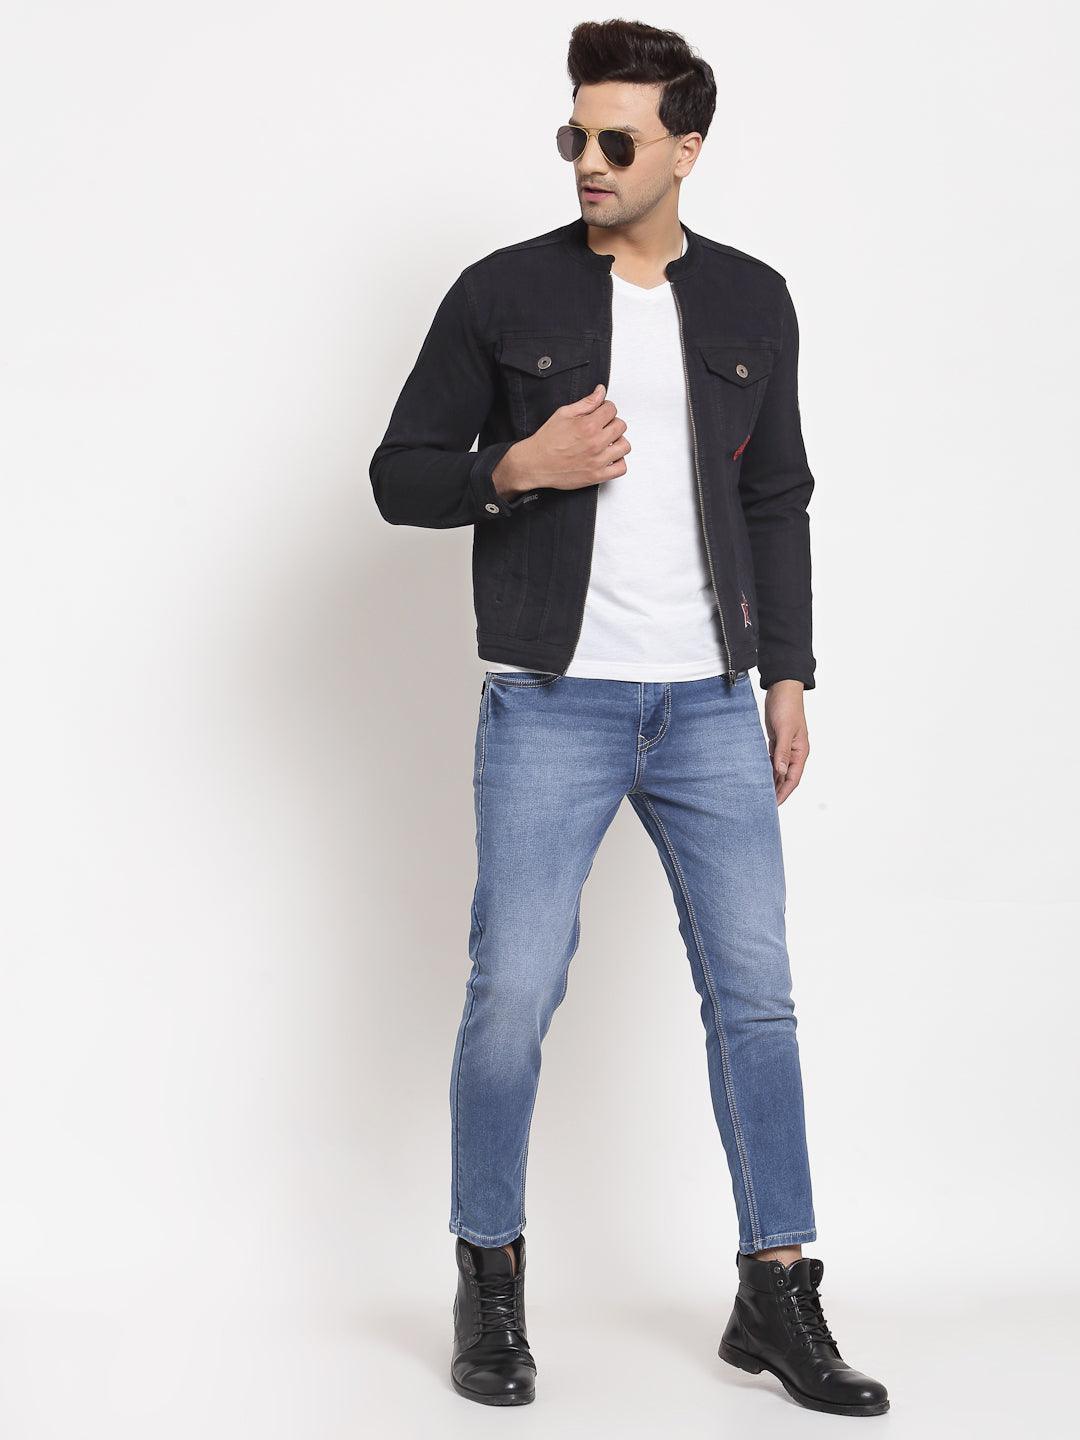 Agapo women's denim jean jacket M | eBay